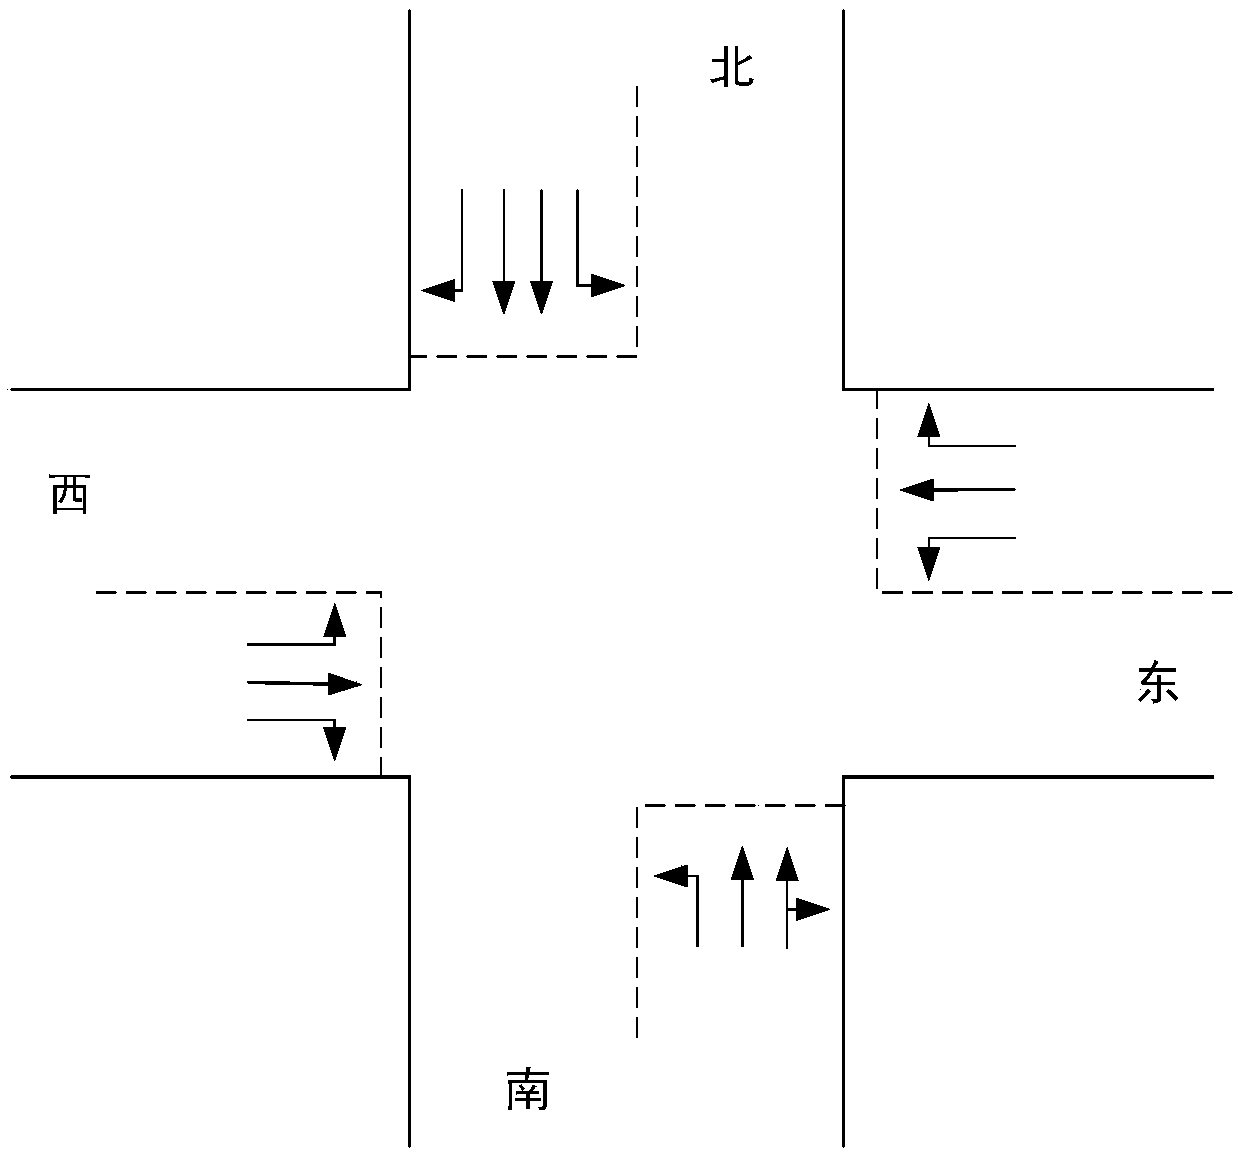 Crossing signal phase scheme green light duration allocation method